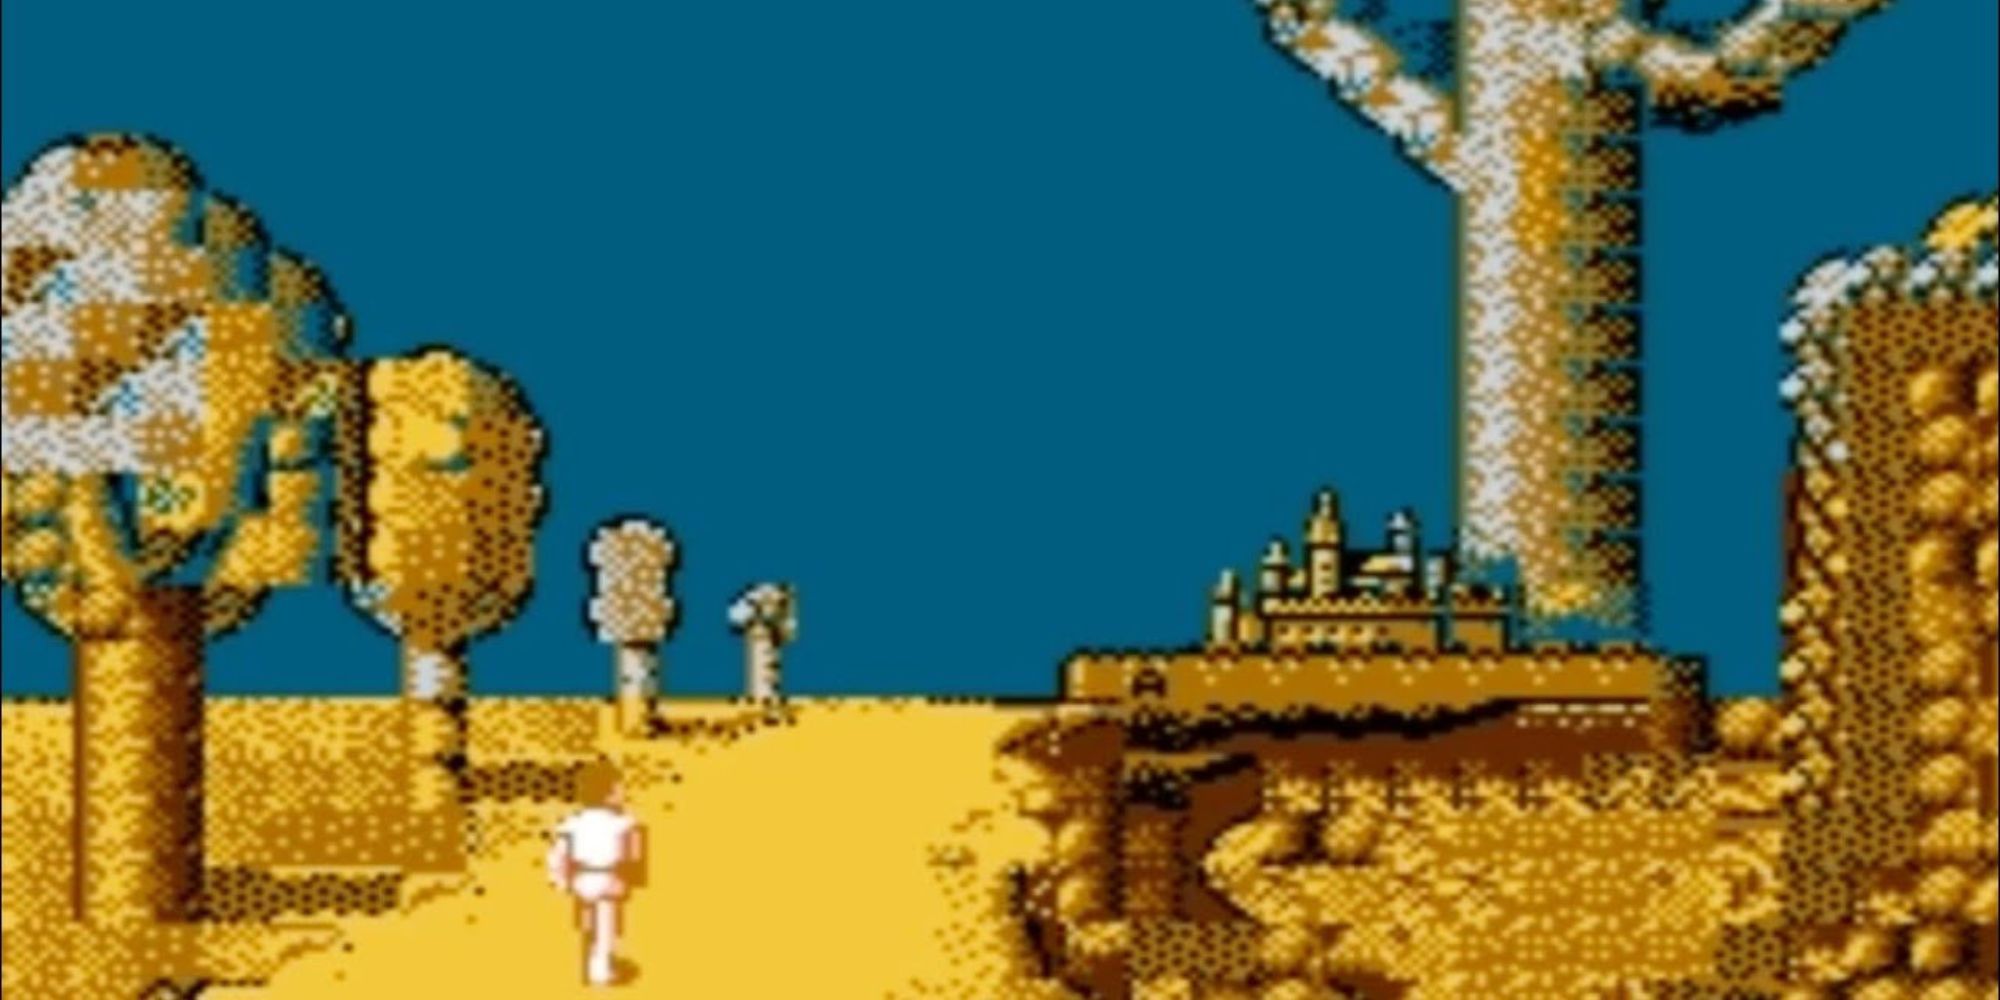 The protagonist walks toward the World Tree